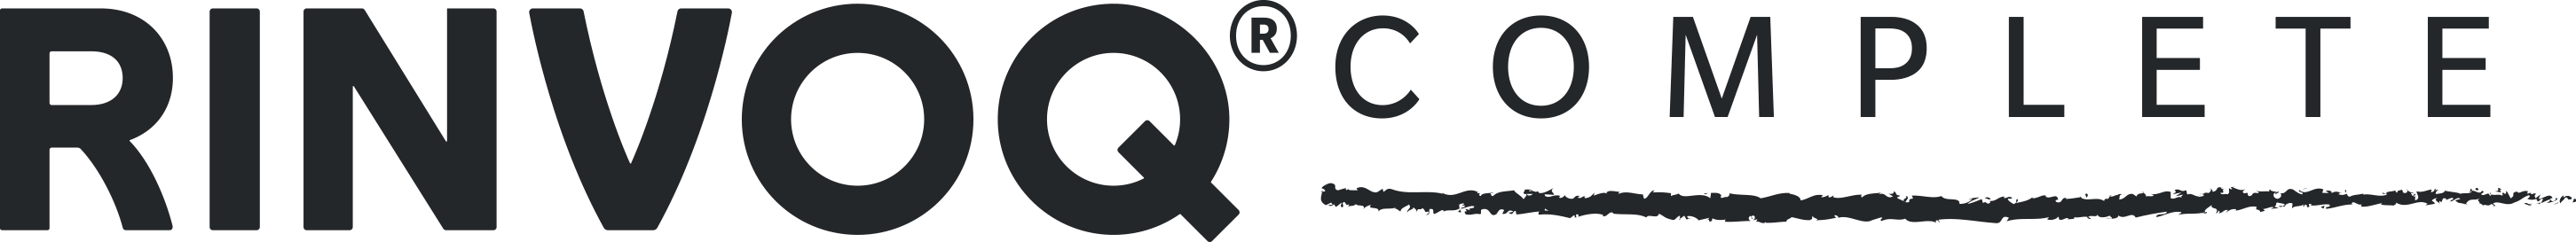 RINVOQ Complete logo.